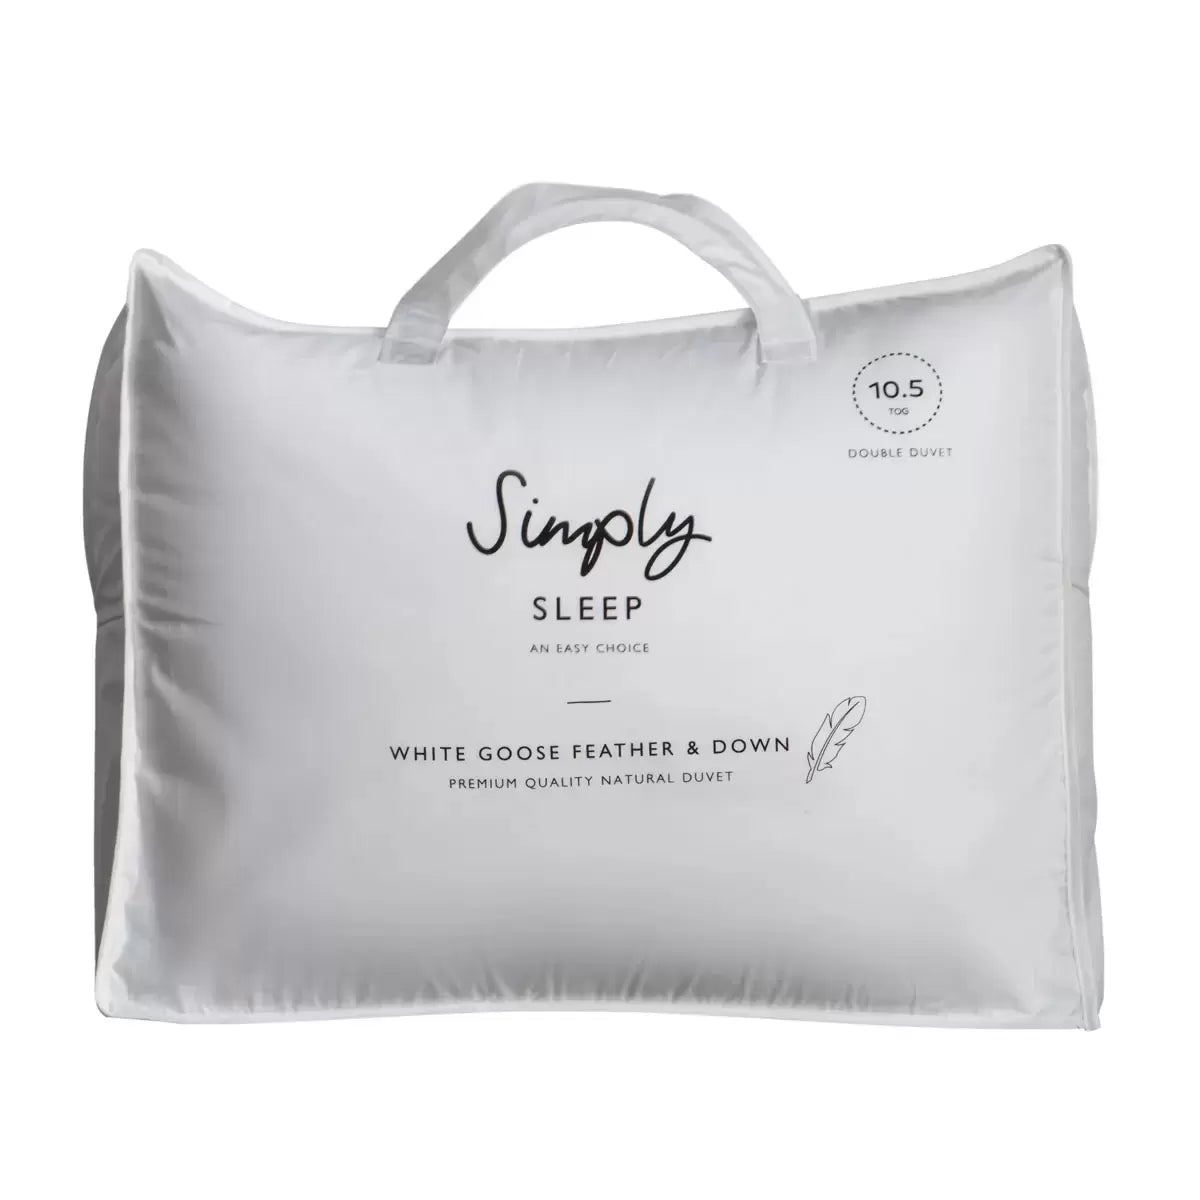 bagged simply sleep duvet